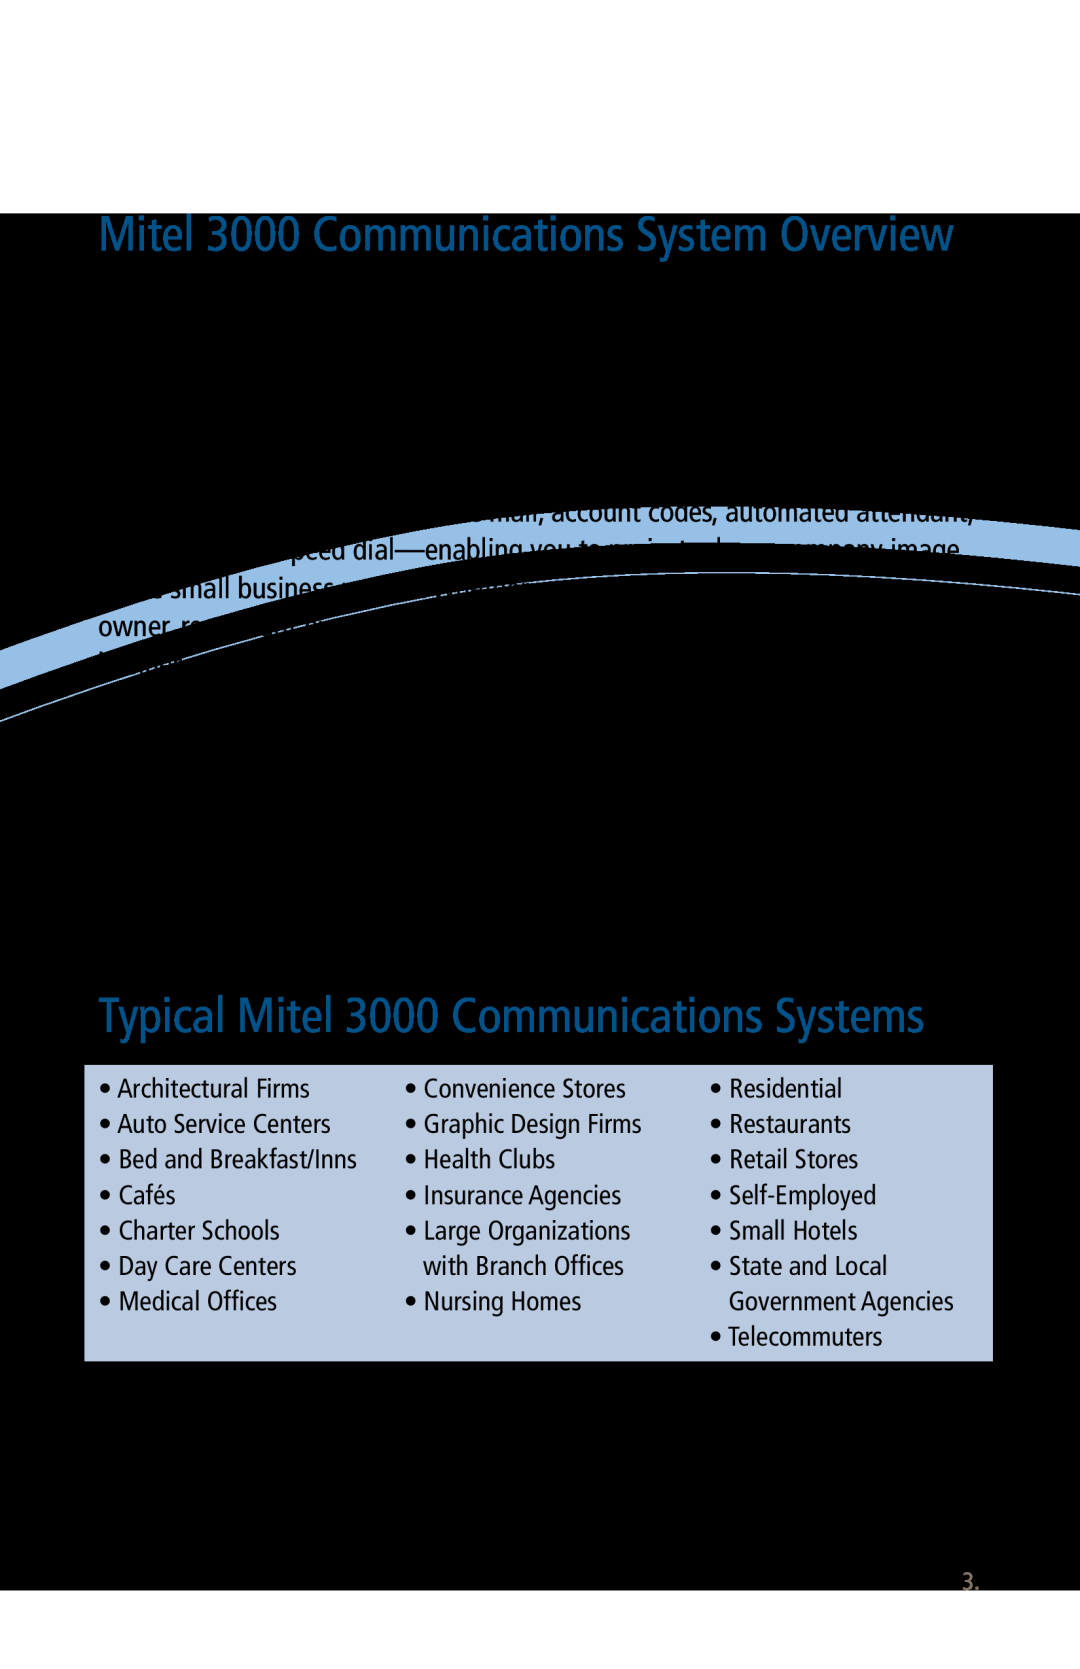 Mitel manual Typical Mitel 3000 Communications Systems, Mitel 3000 Communications System Overview 